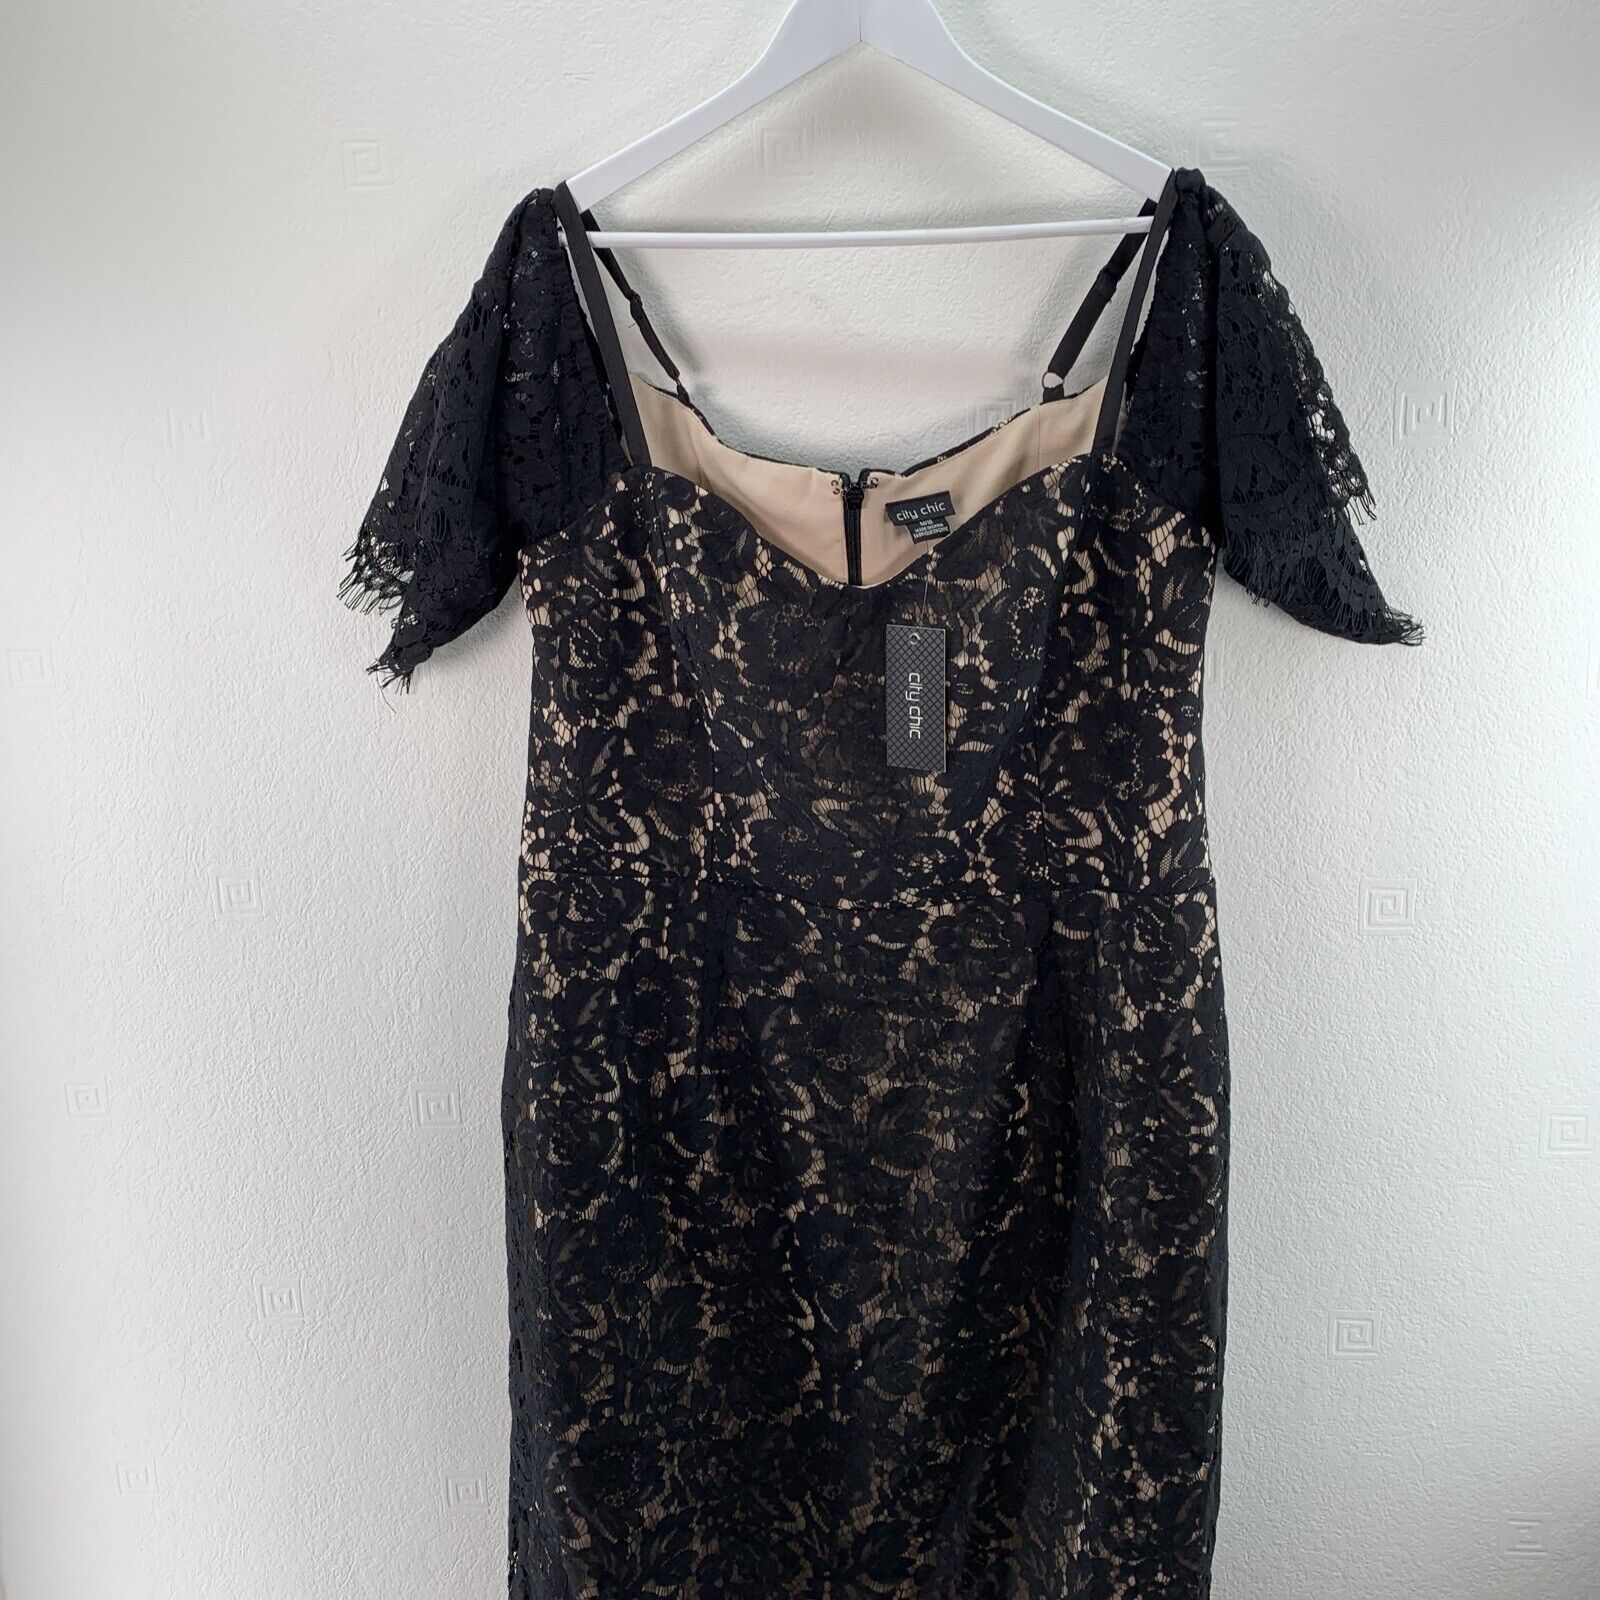 Evans City Chic Lace Whisper Dress, Size M UK 18, Black Nude, RRP £75